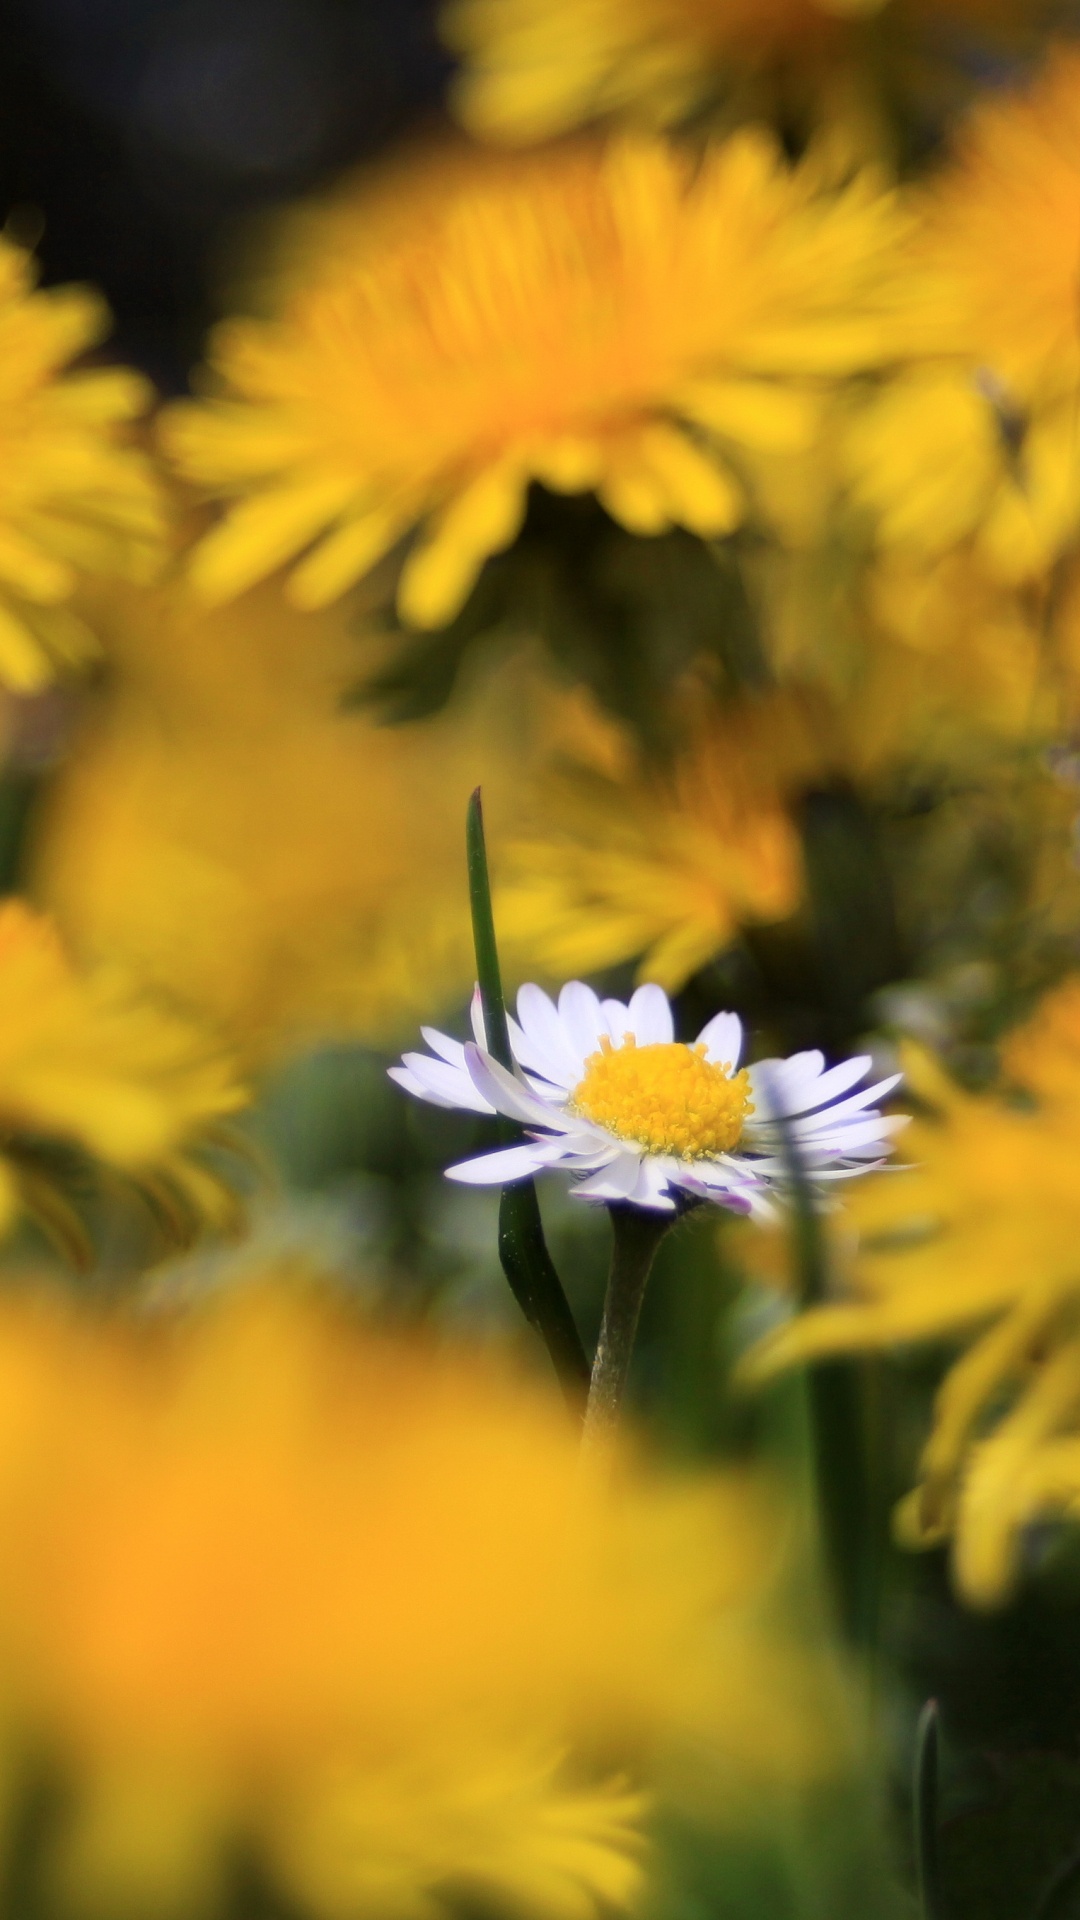 Yellow and White Flowers in Tilt Shift Lens. Wallpaper in 1080x1920 Resolution